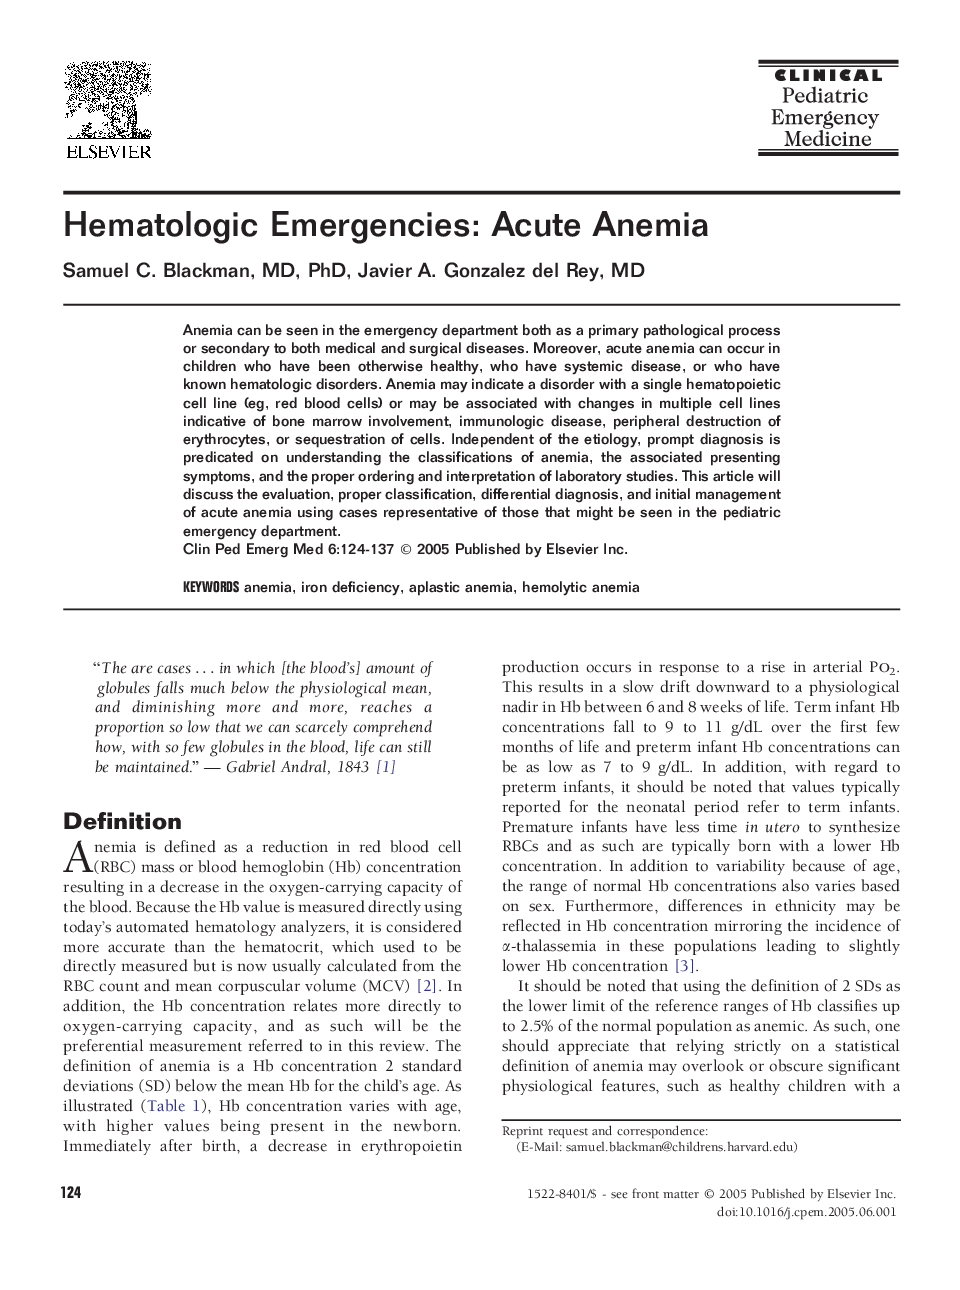 Hematologic Emergencies: Acute Anemia